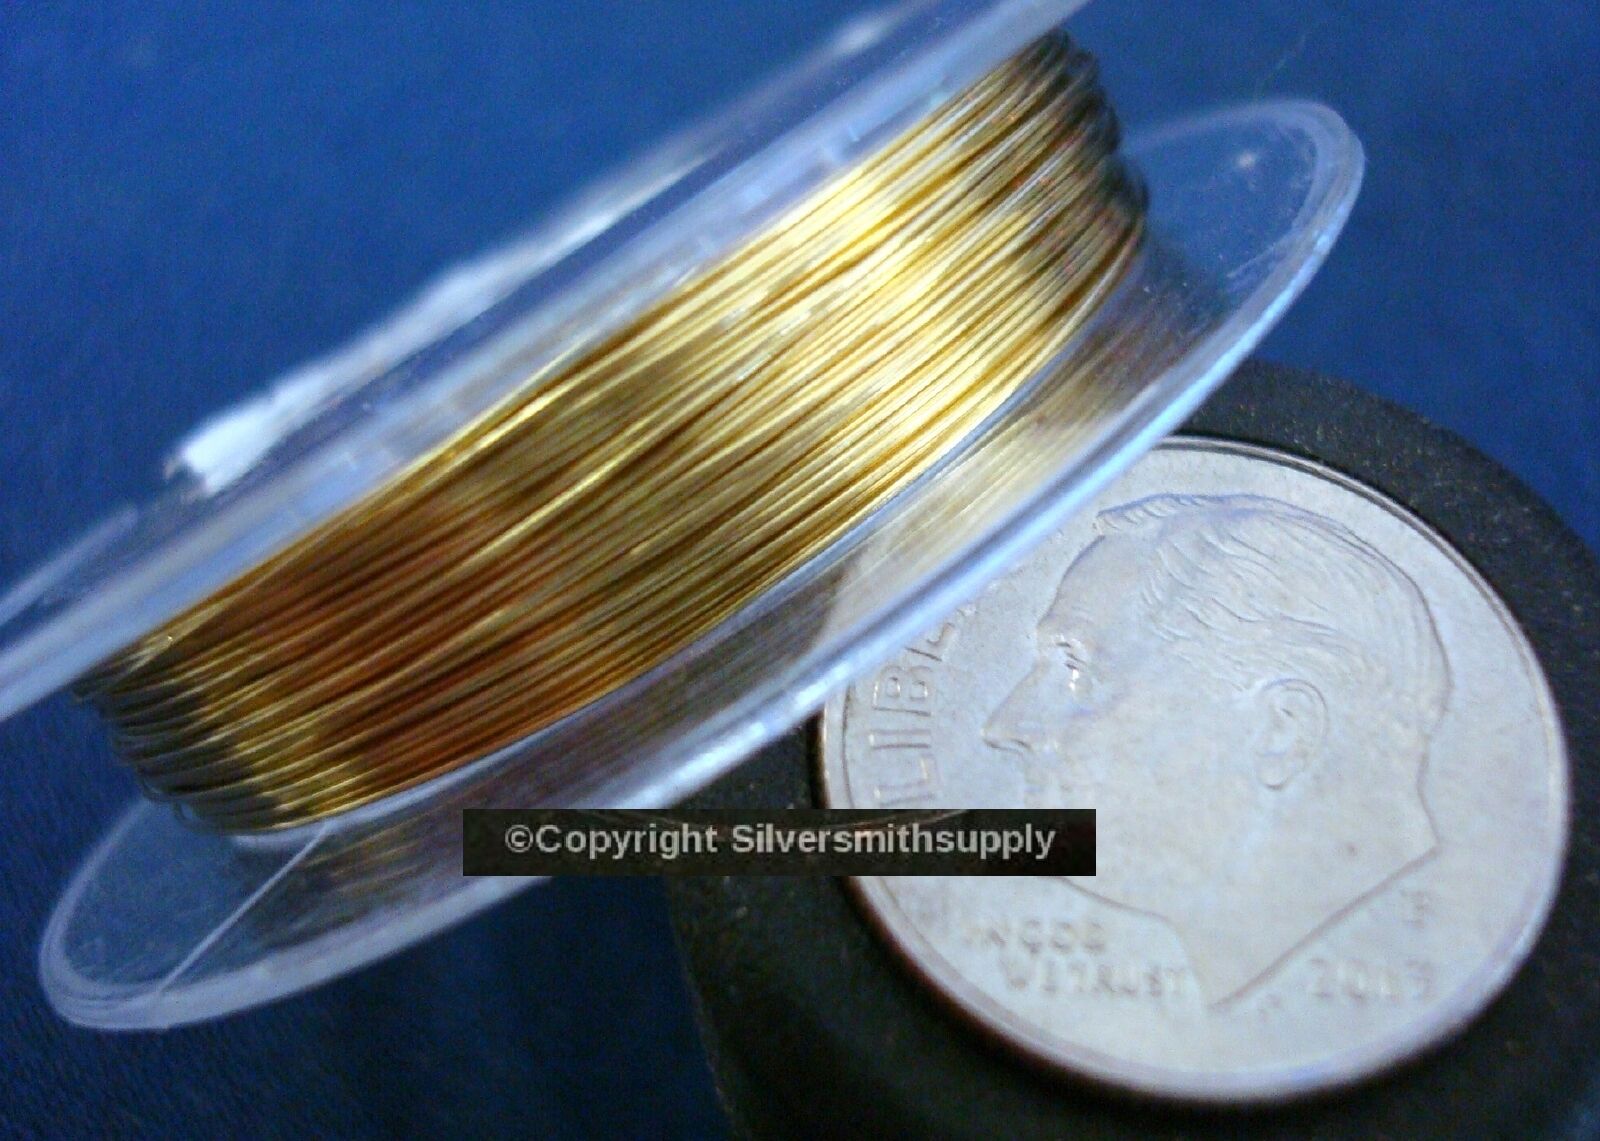 30ga Gold plated copper round wire .3mm .012 create wire wrapped jewelry PW022 Silversmithsupply.com - фотография #2